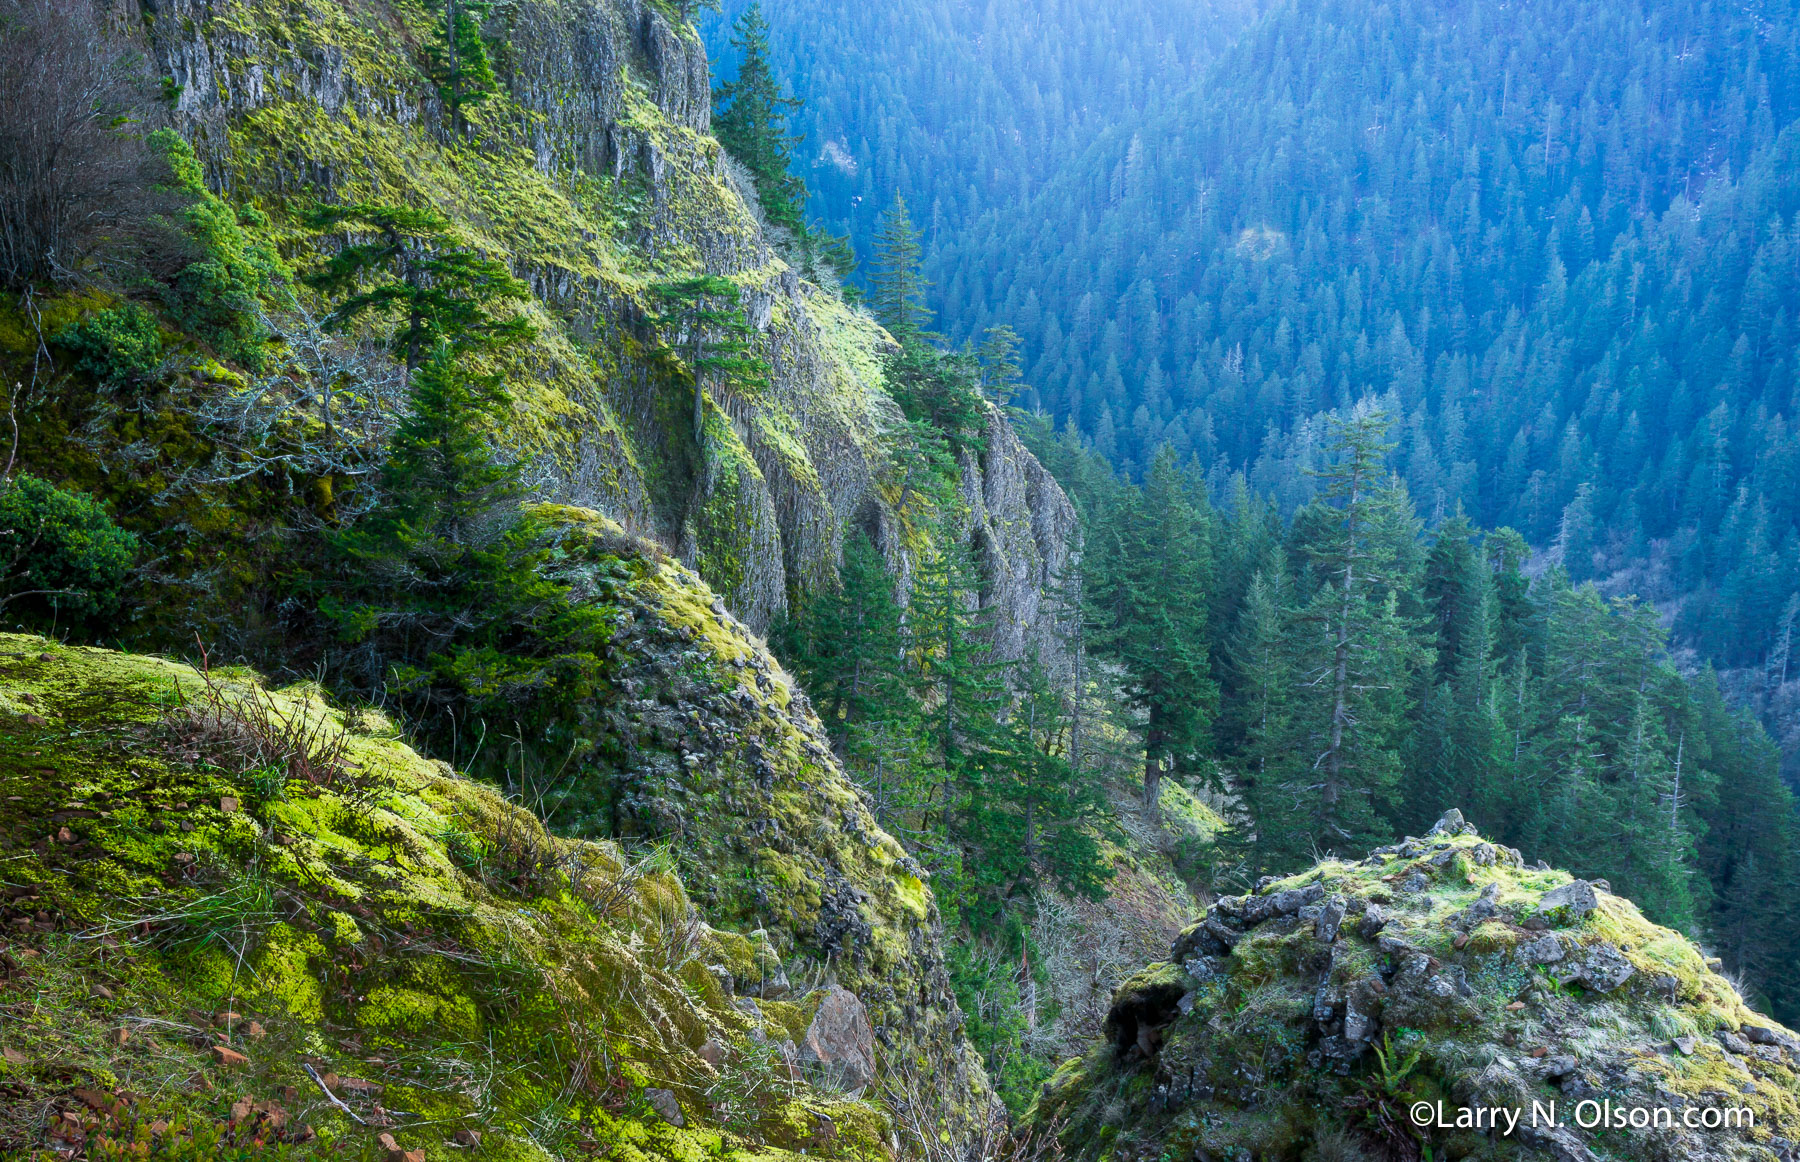 Basalt Cliffs, Eagle Creek, OR | Moss covers balatlt cliffs high above Eagle Creek in the Columbia River Gorge.